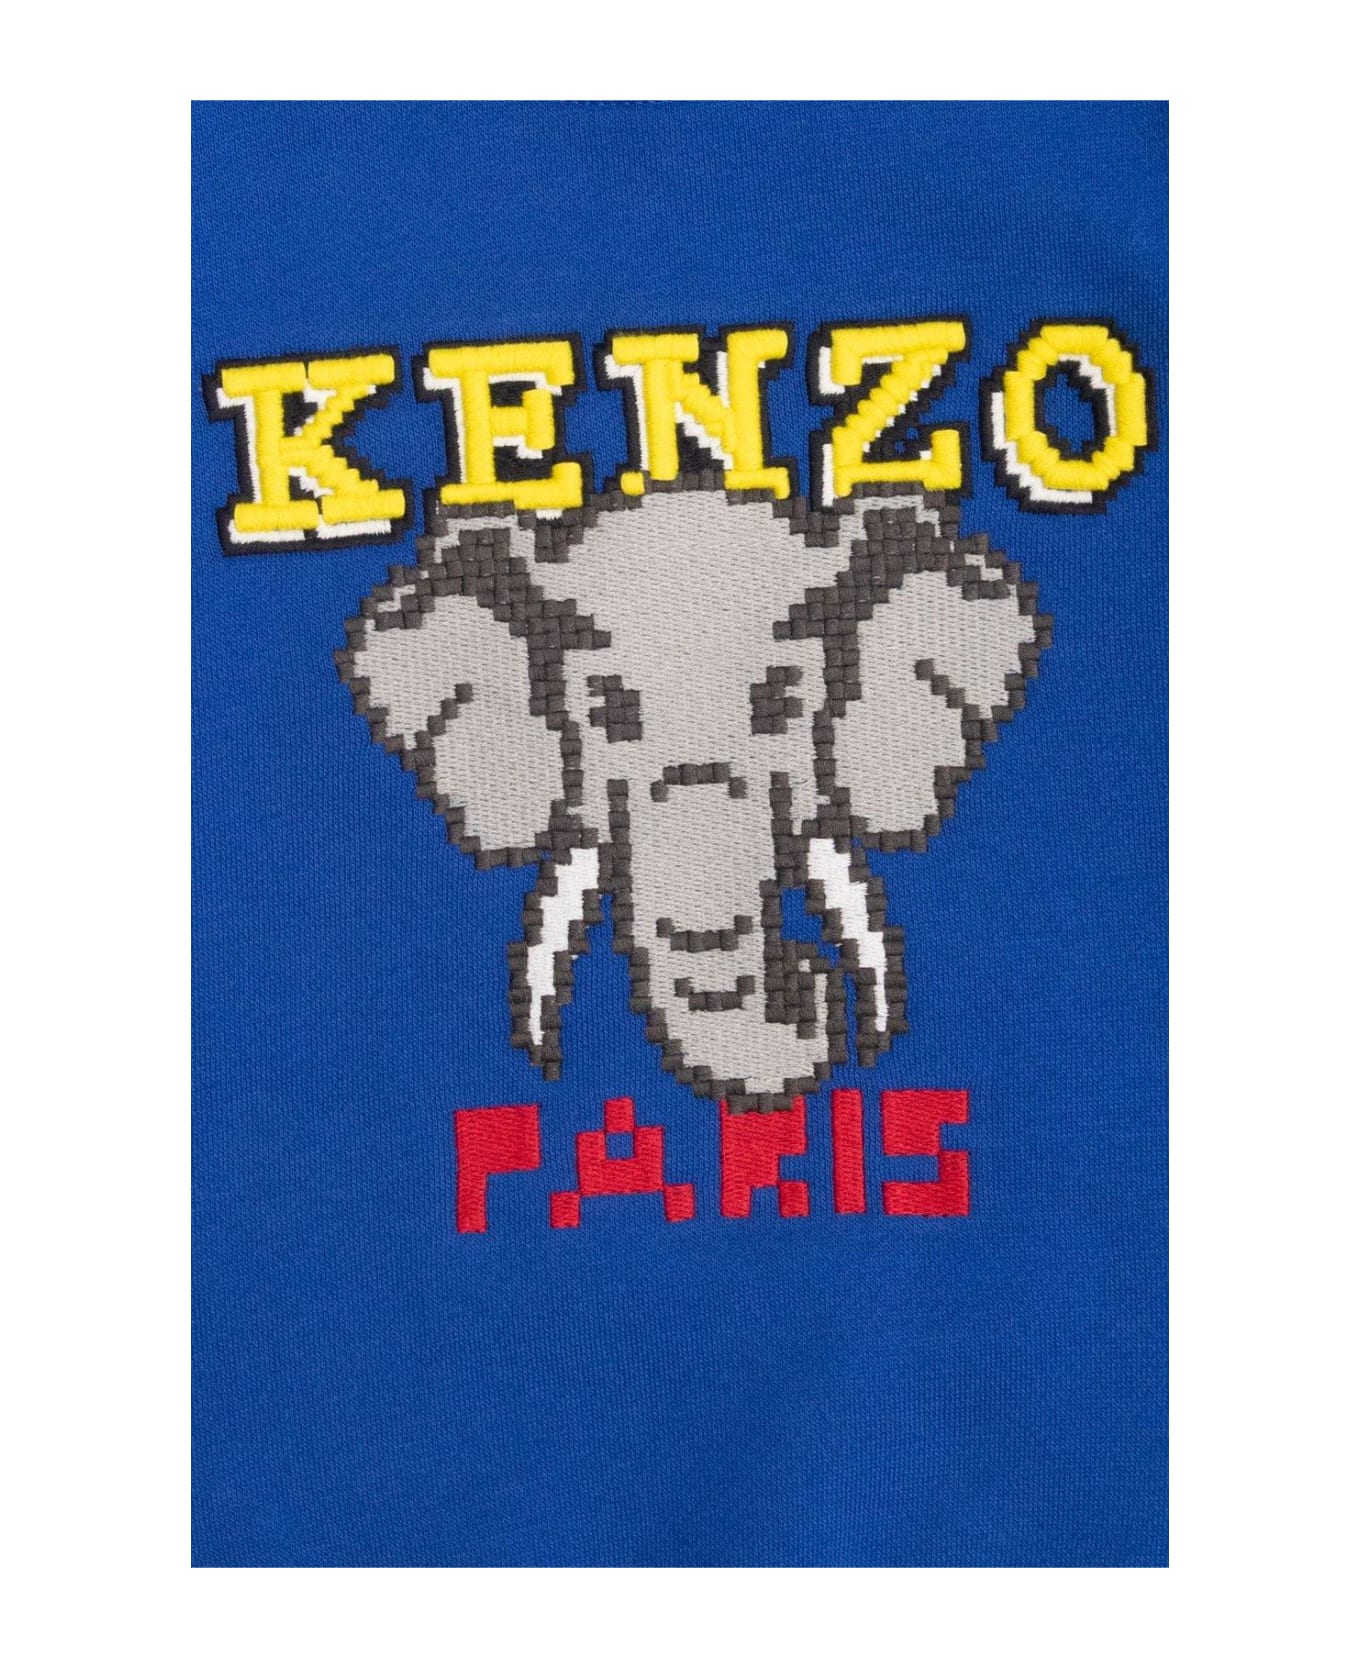 Kenzo Kids Jungle Game Elephant Crewneck Sweatshirt - Blu